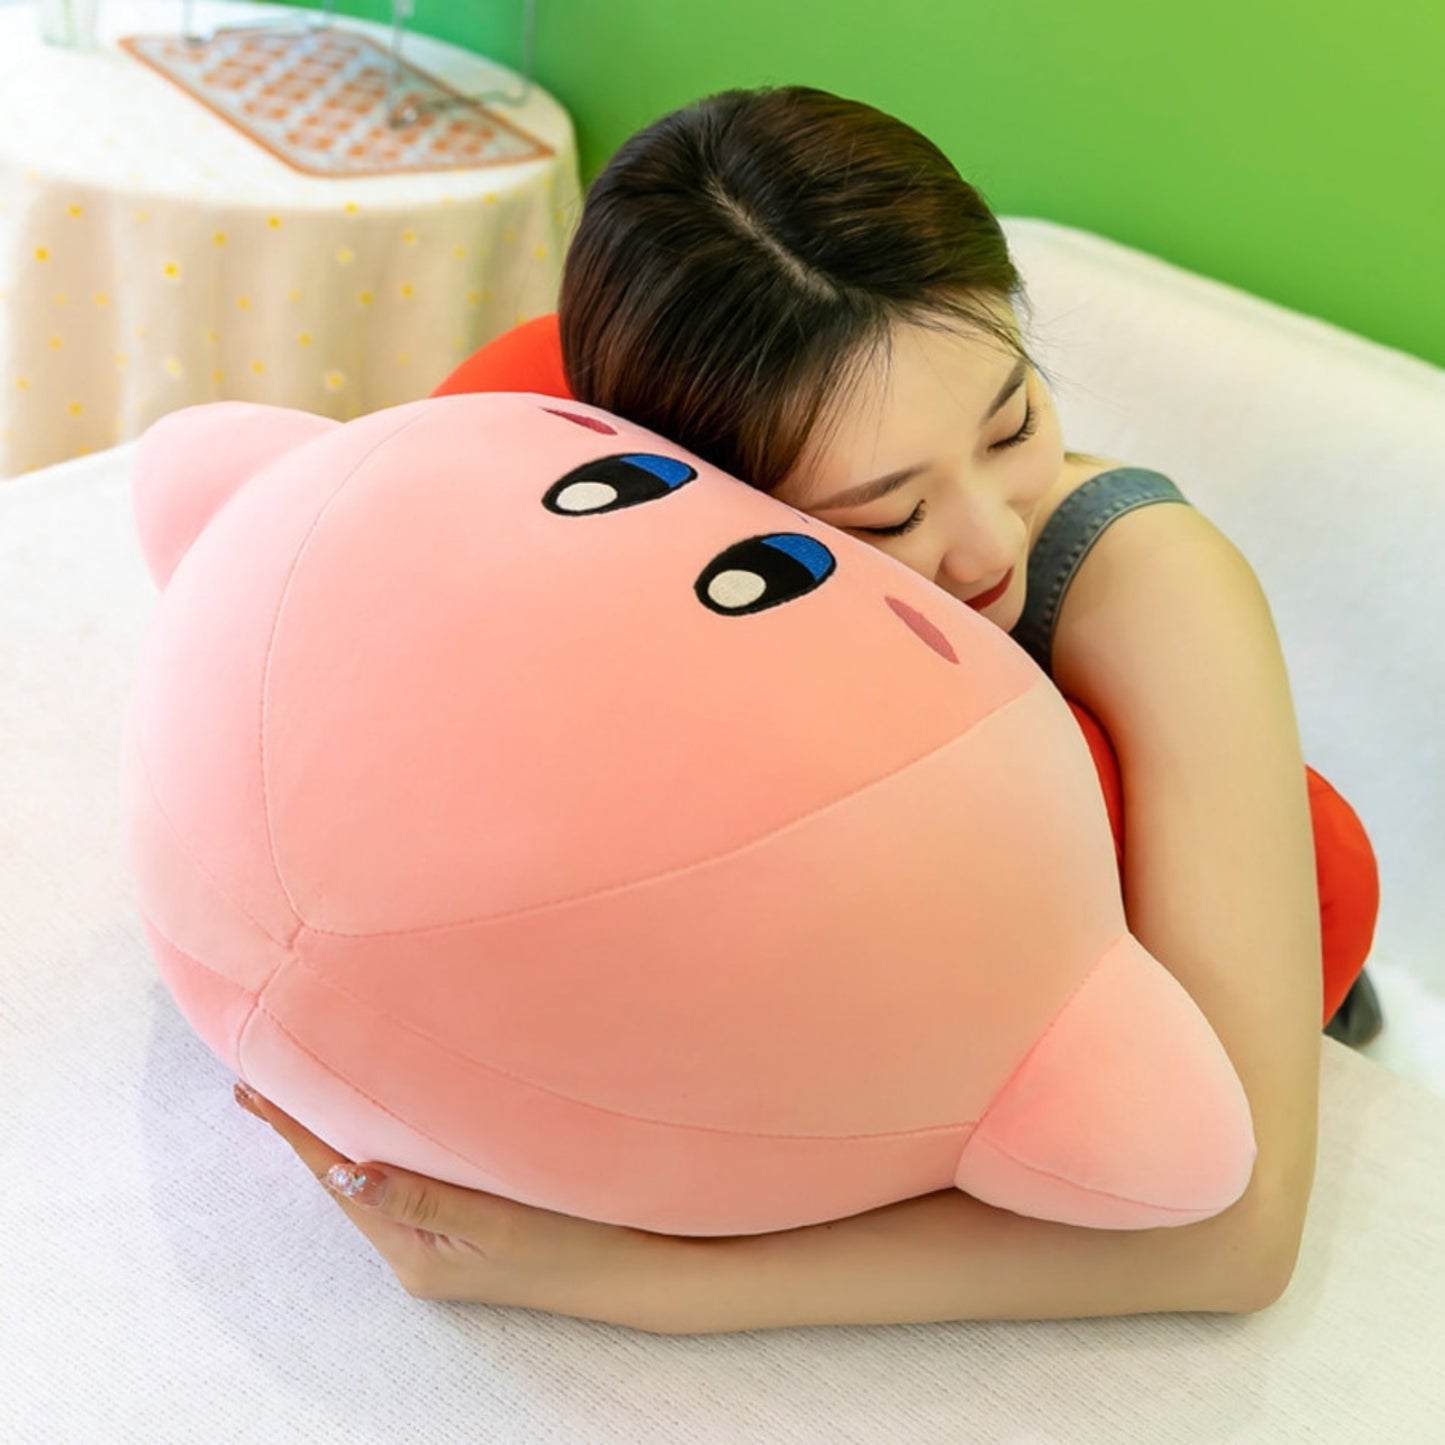 Super Smash Bros Kirby Plush Fluffy Pink Soft Stuffed Toy Doll